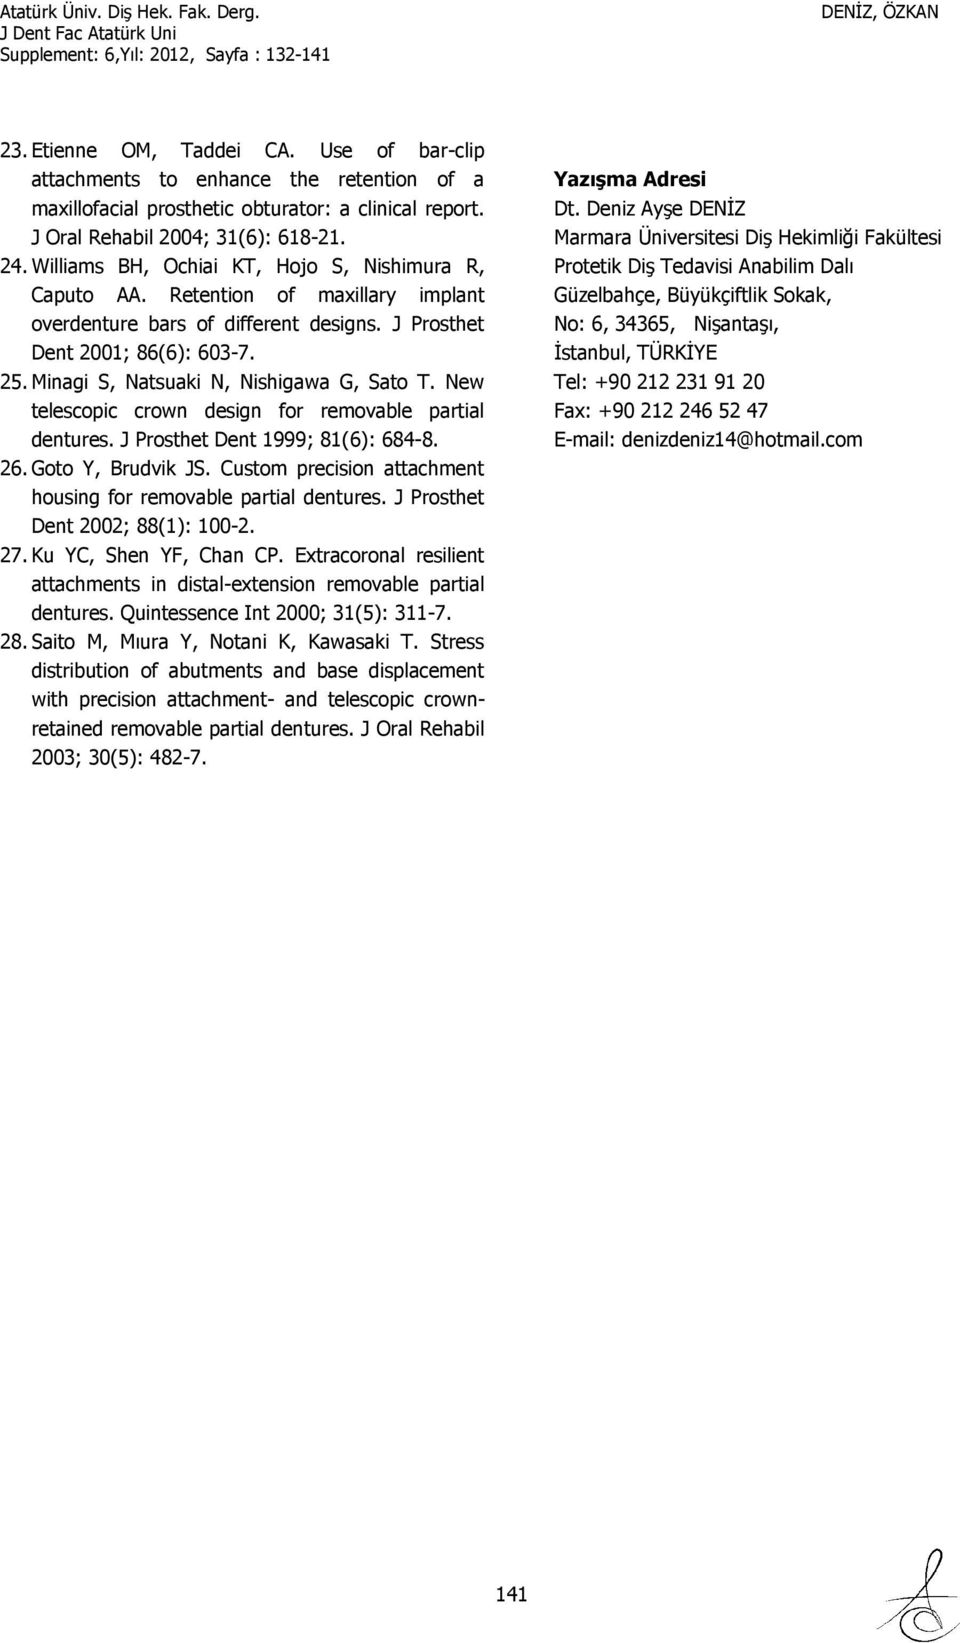 Minagi S, Natsuaki N, Nishigawa G, Sato T. New telescopic crown design for removable partial dentures. J Prosthet Dent 1999; 81(6): 684-8. 26. Goto Y, Brudvik JS.